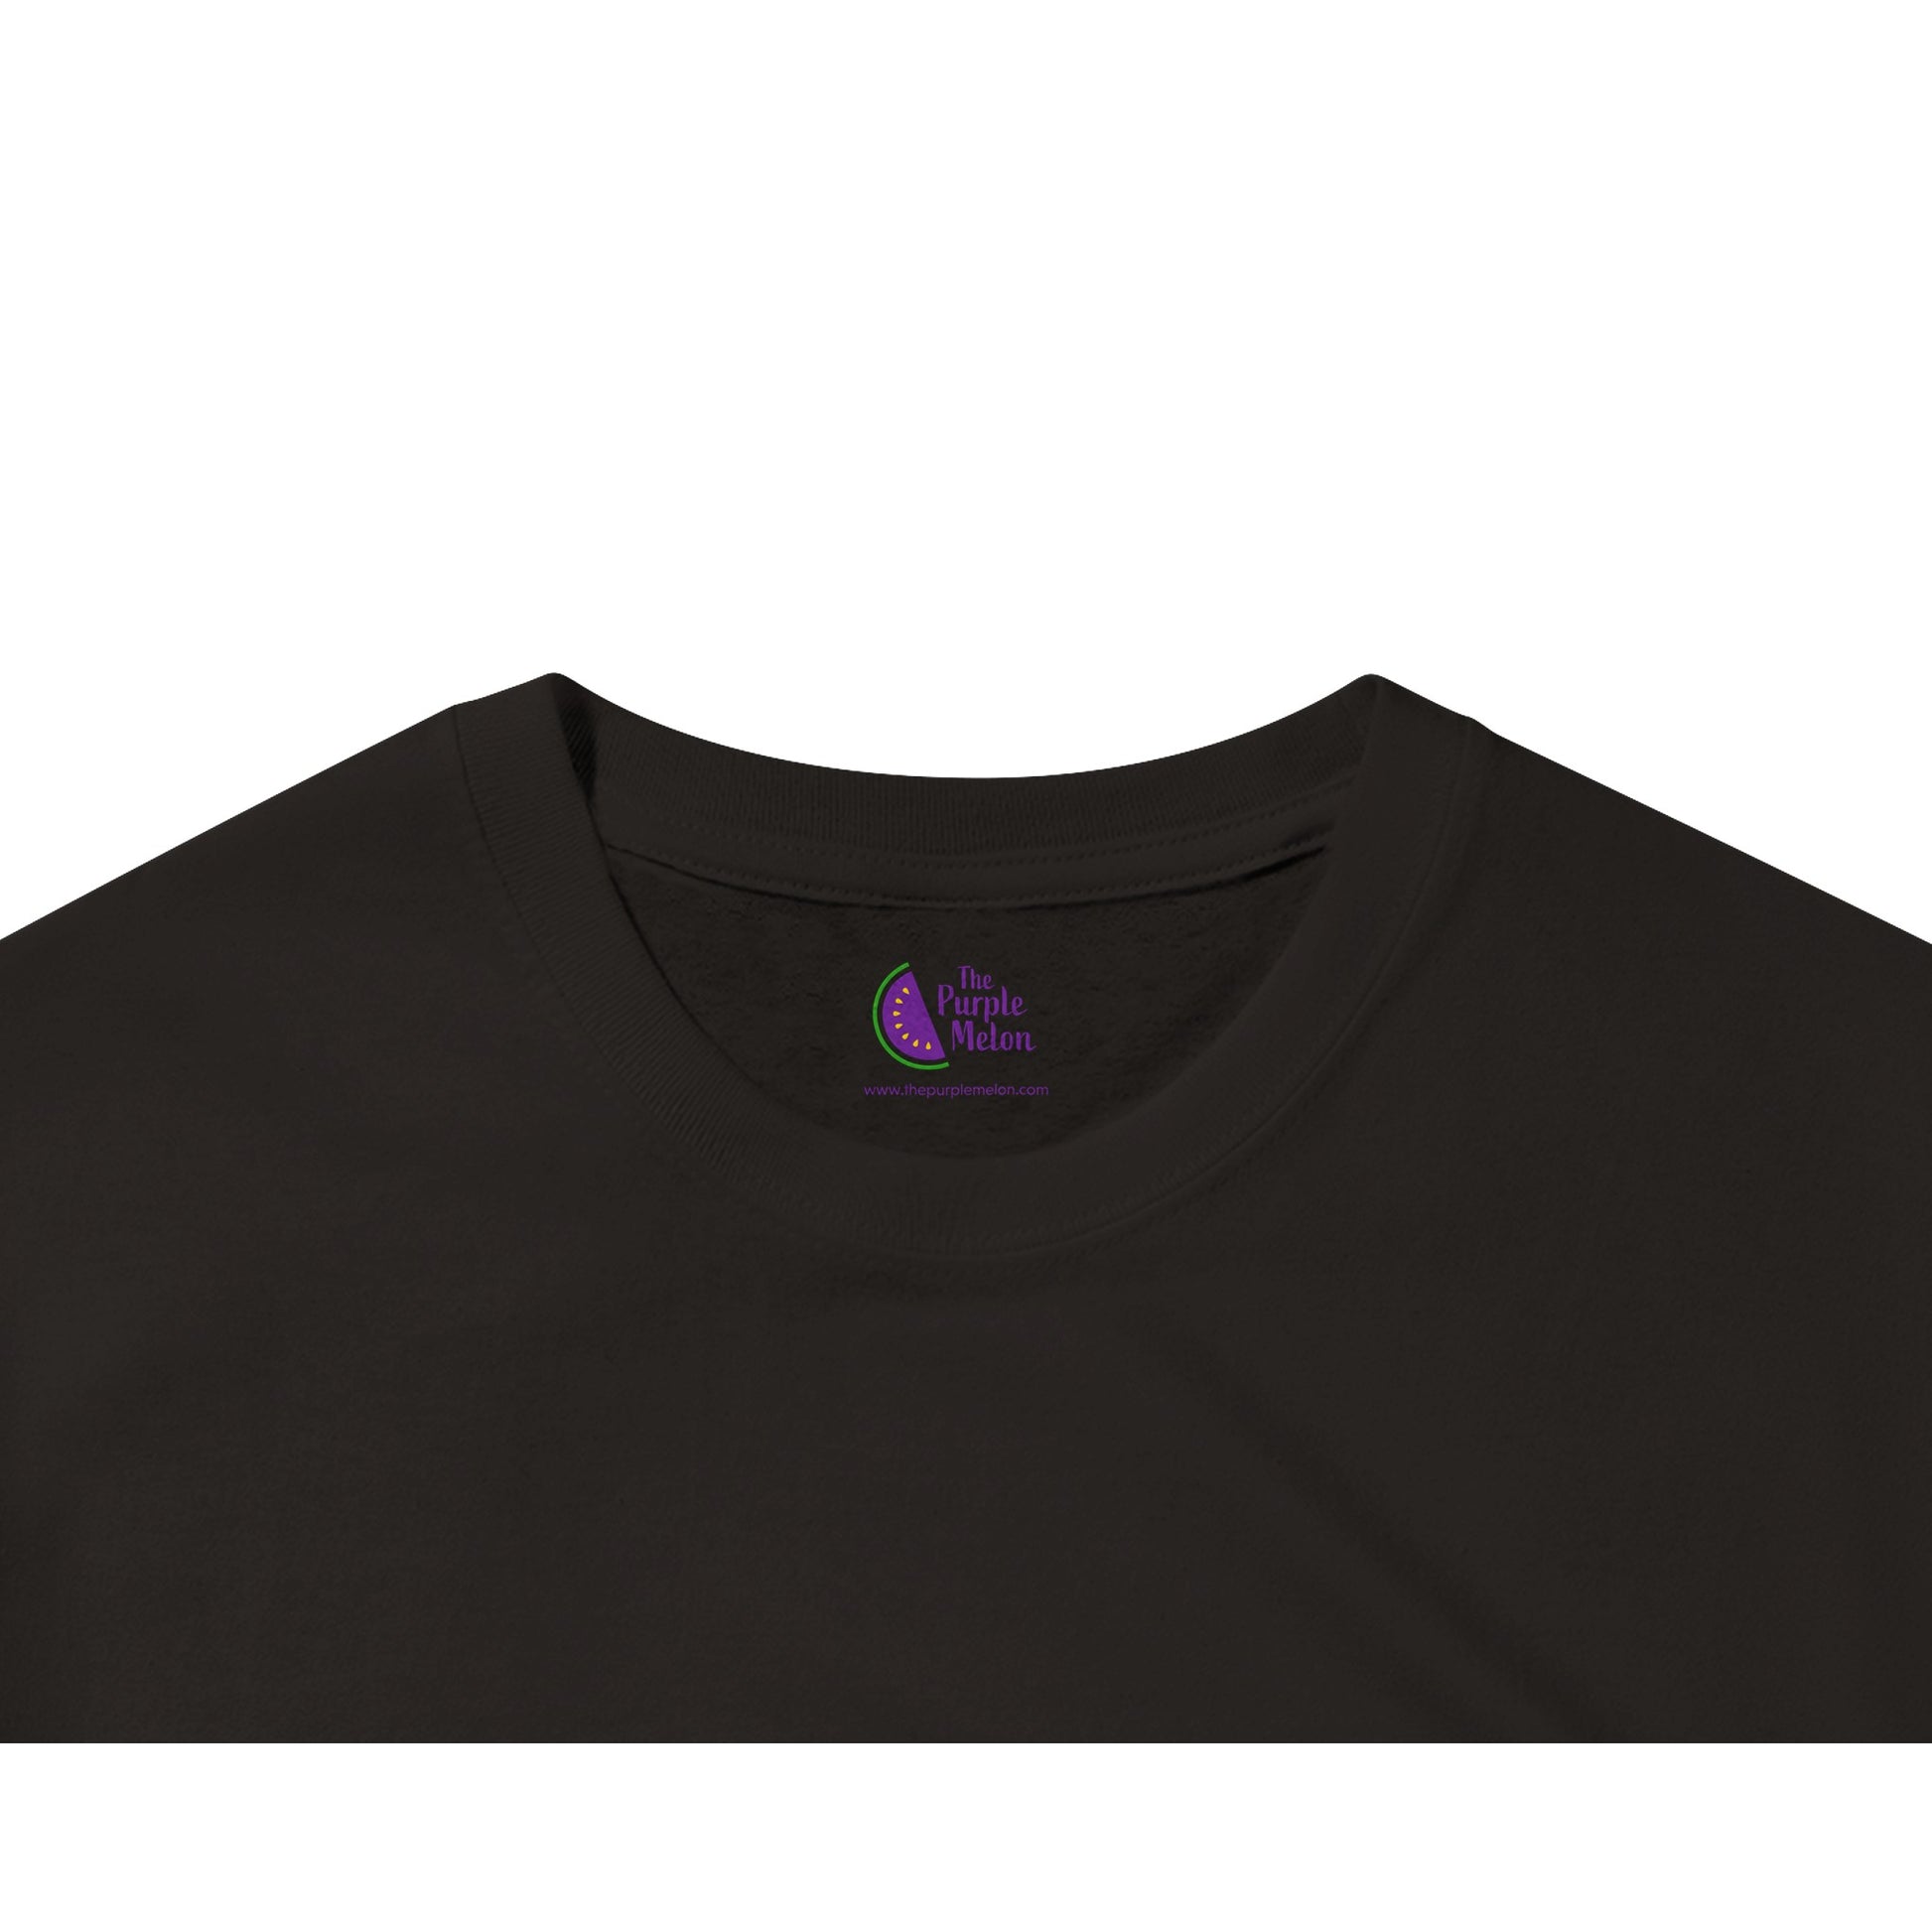 neck label on a black t-shirt of the purple melon logo